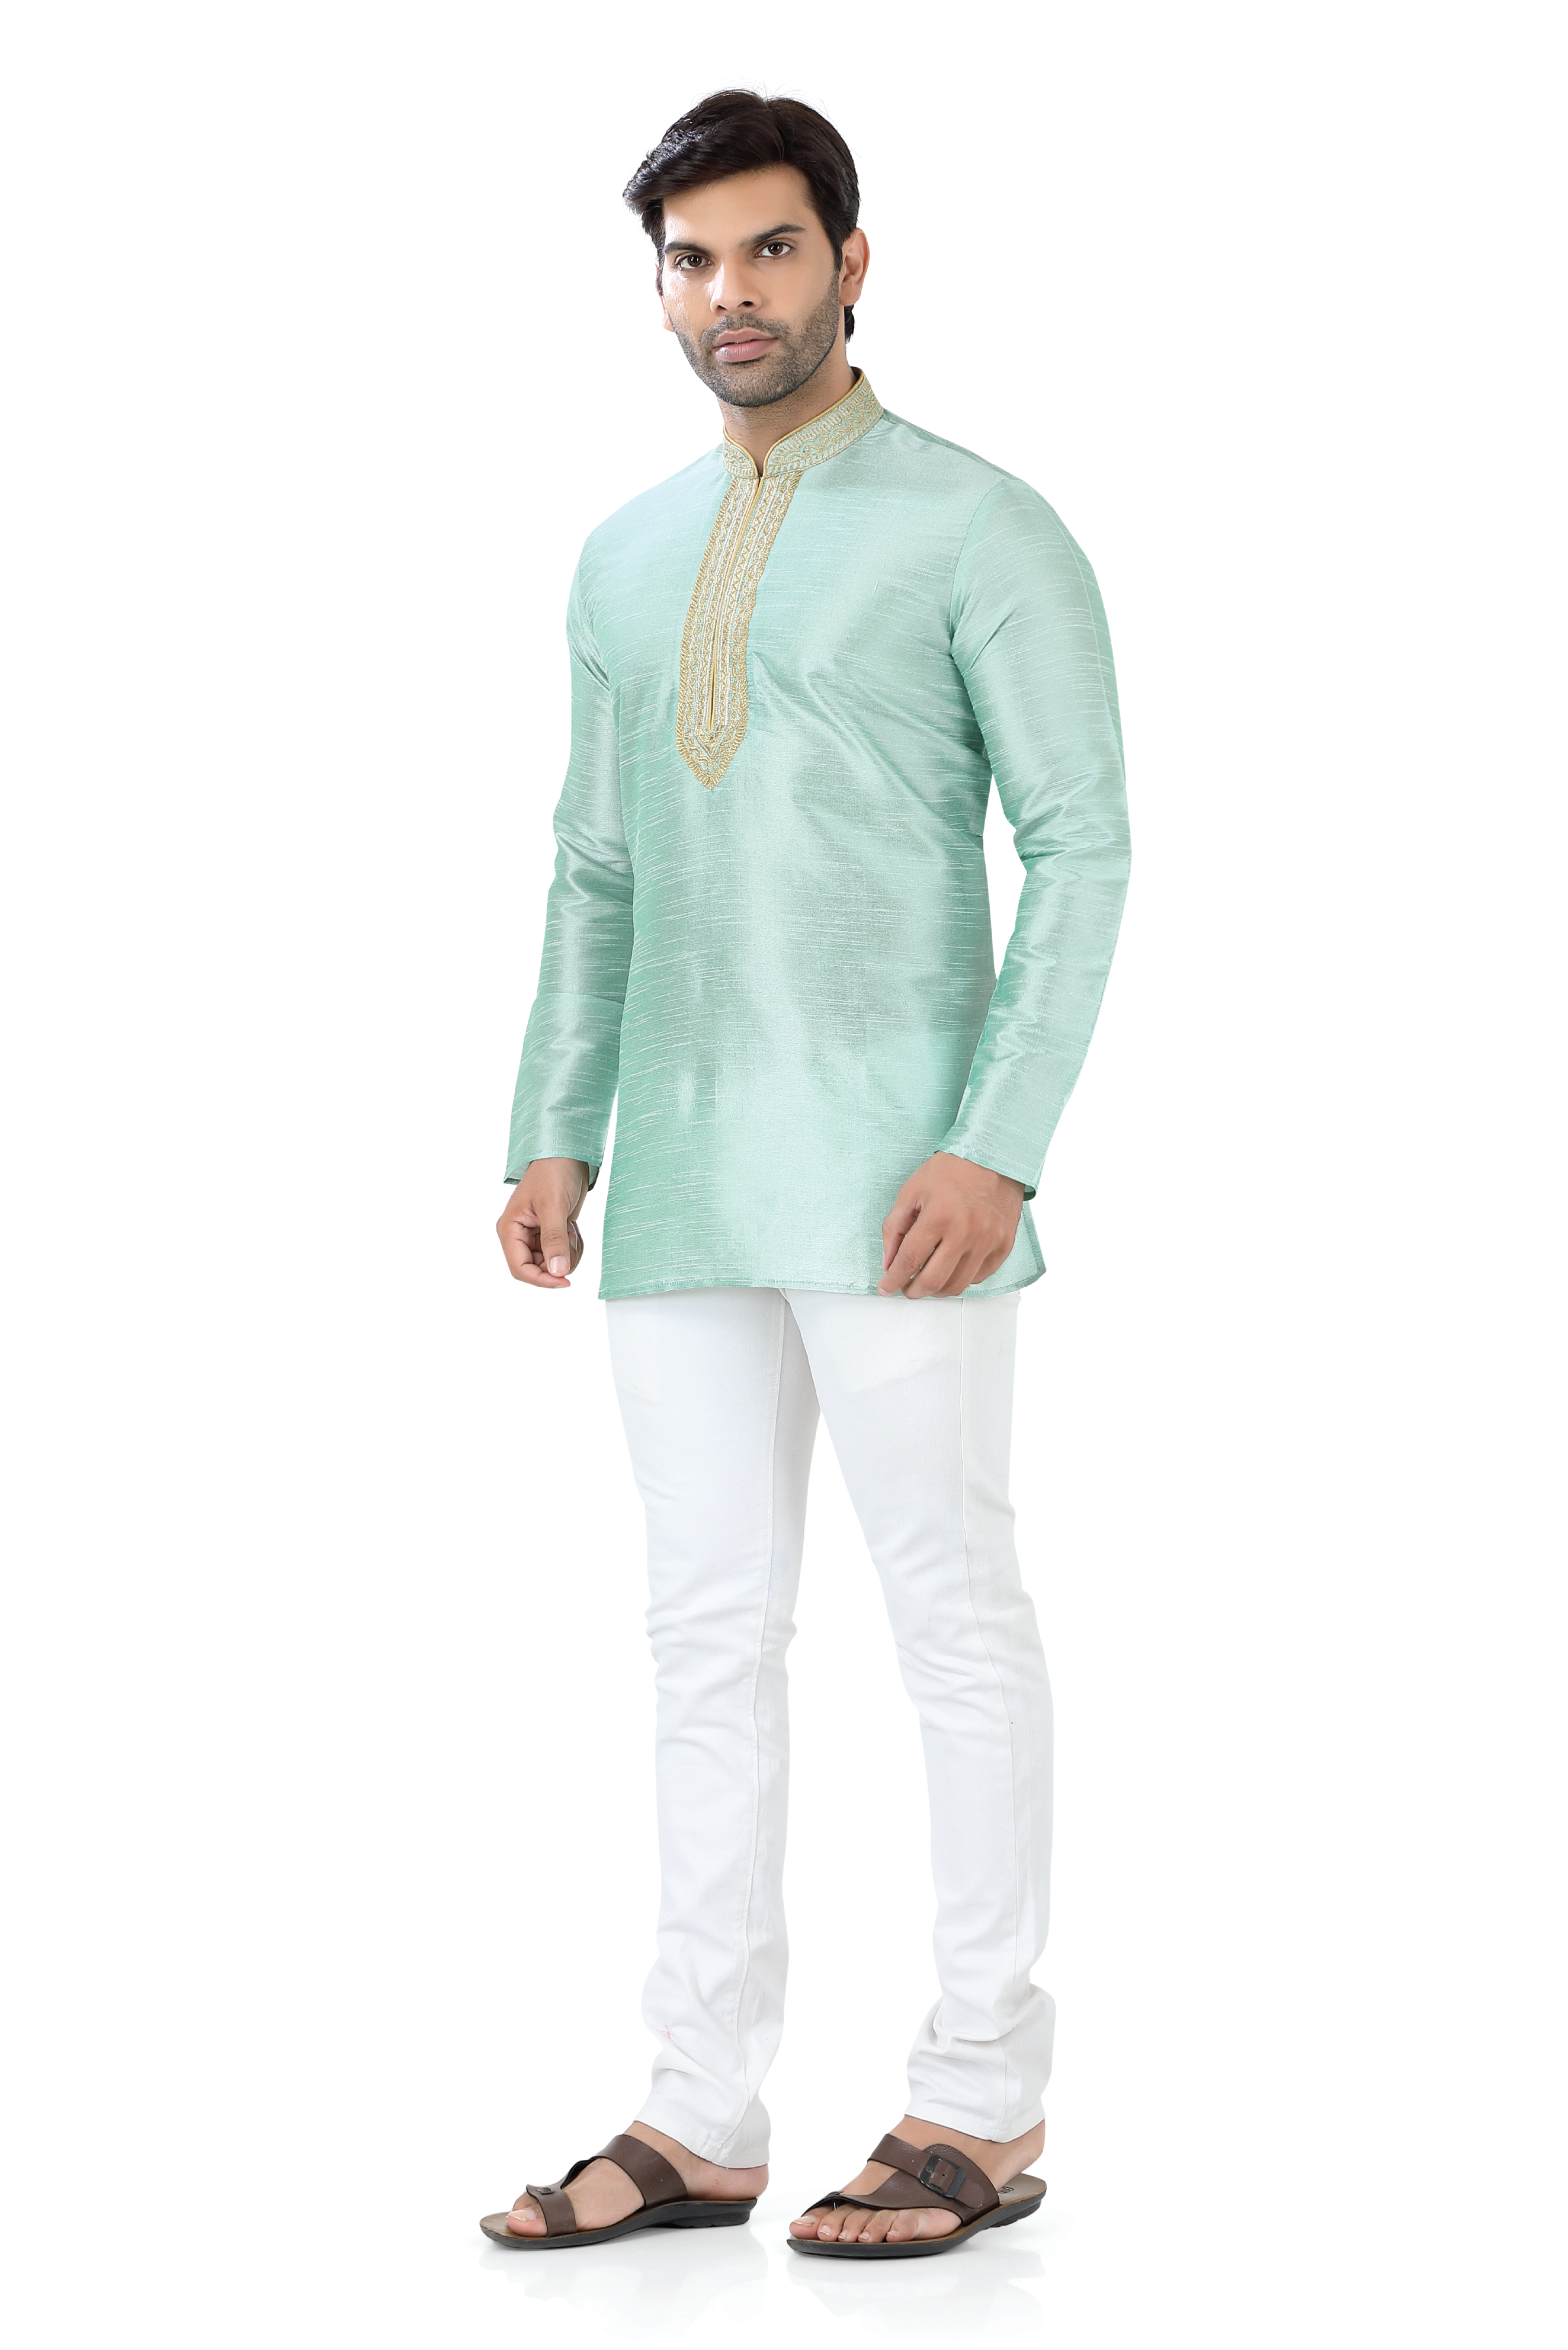 Banarasi Dupion Silk Short Kurta with Embroidery in Sage Color - Premium kurta pajama from Dapper Ethnic - Just $49! Shop now at Dulhan Exclusives